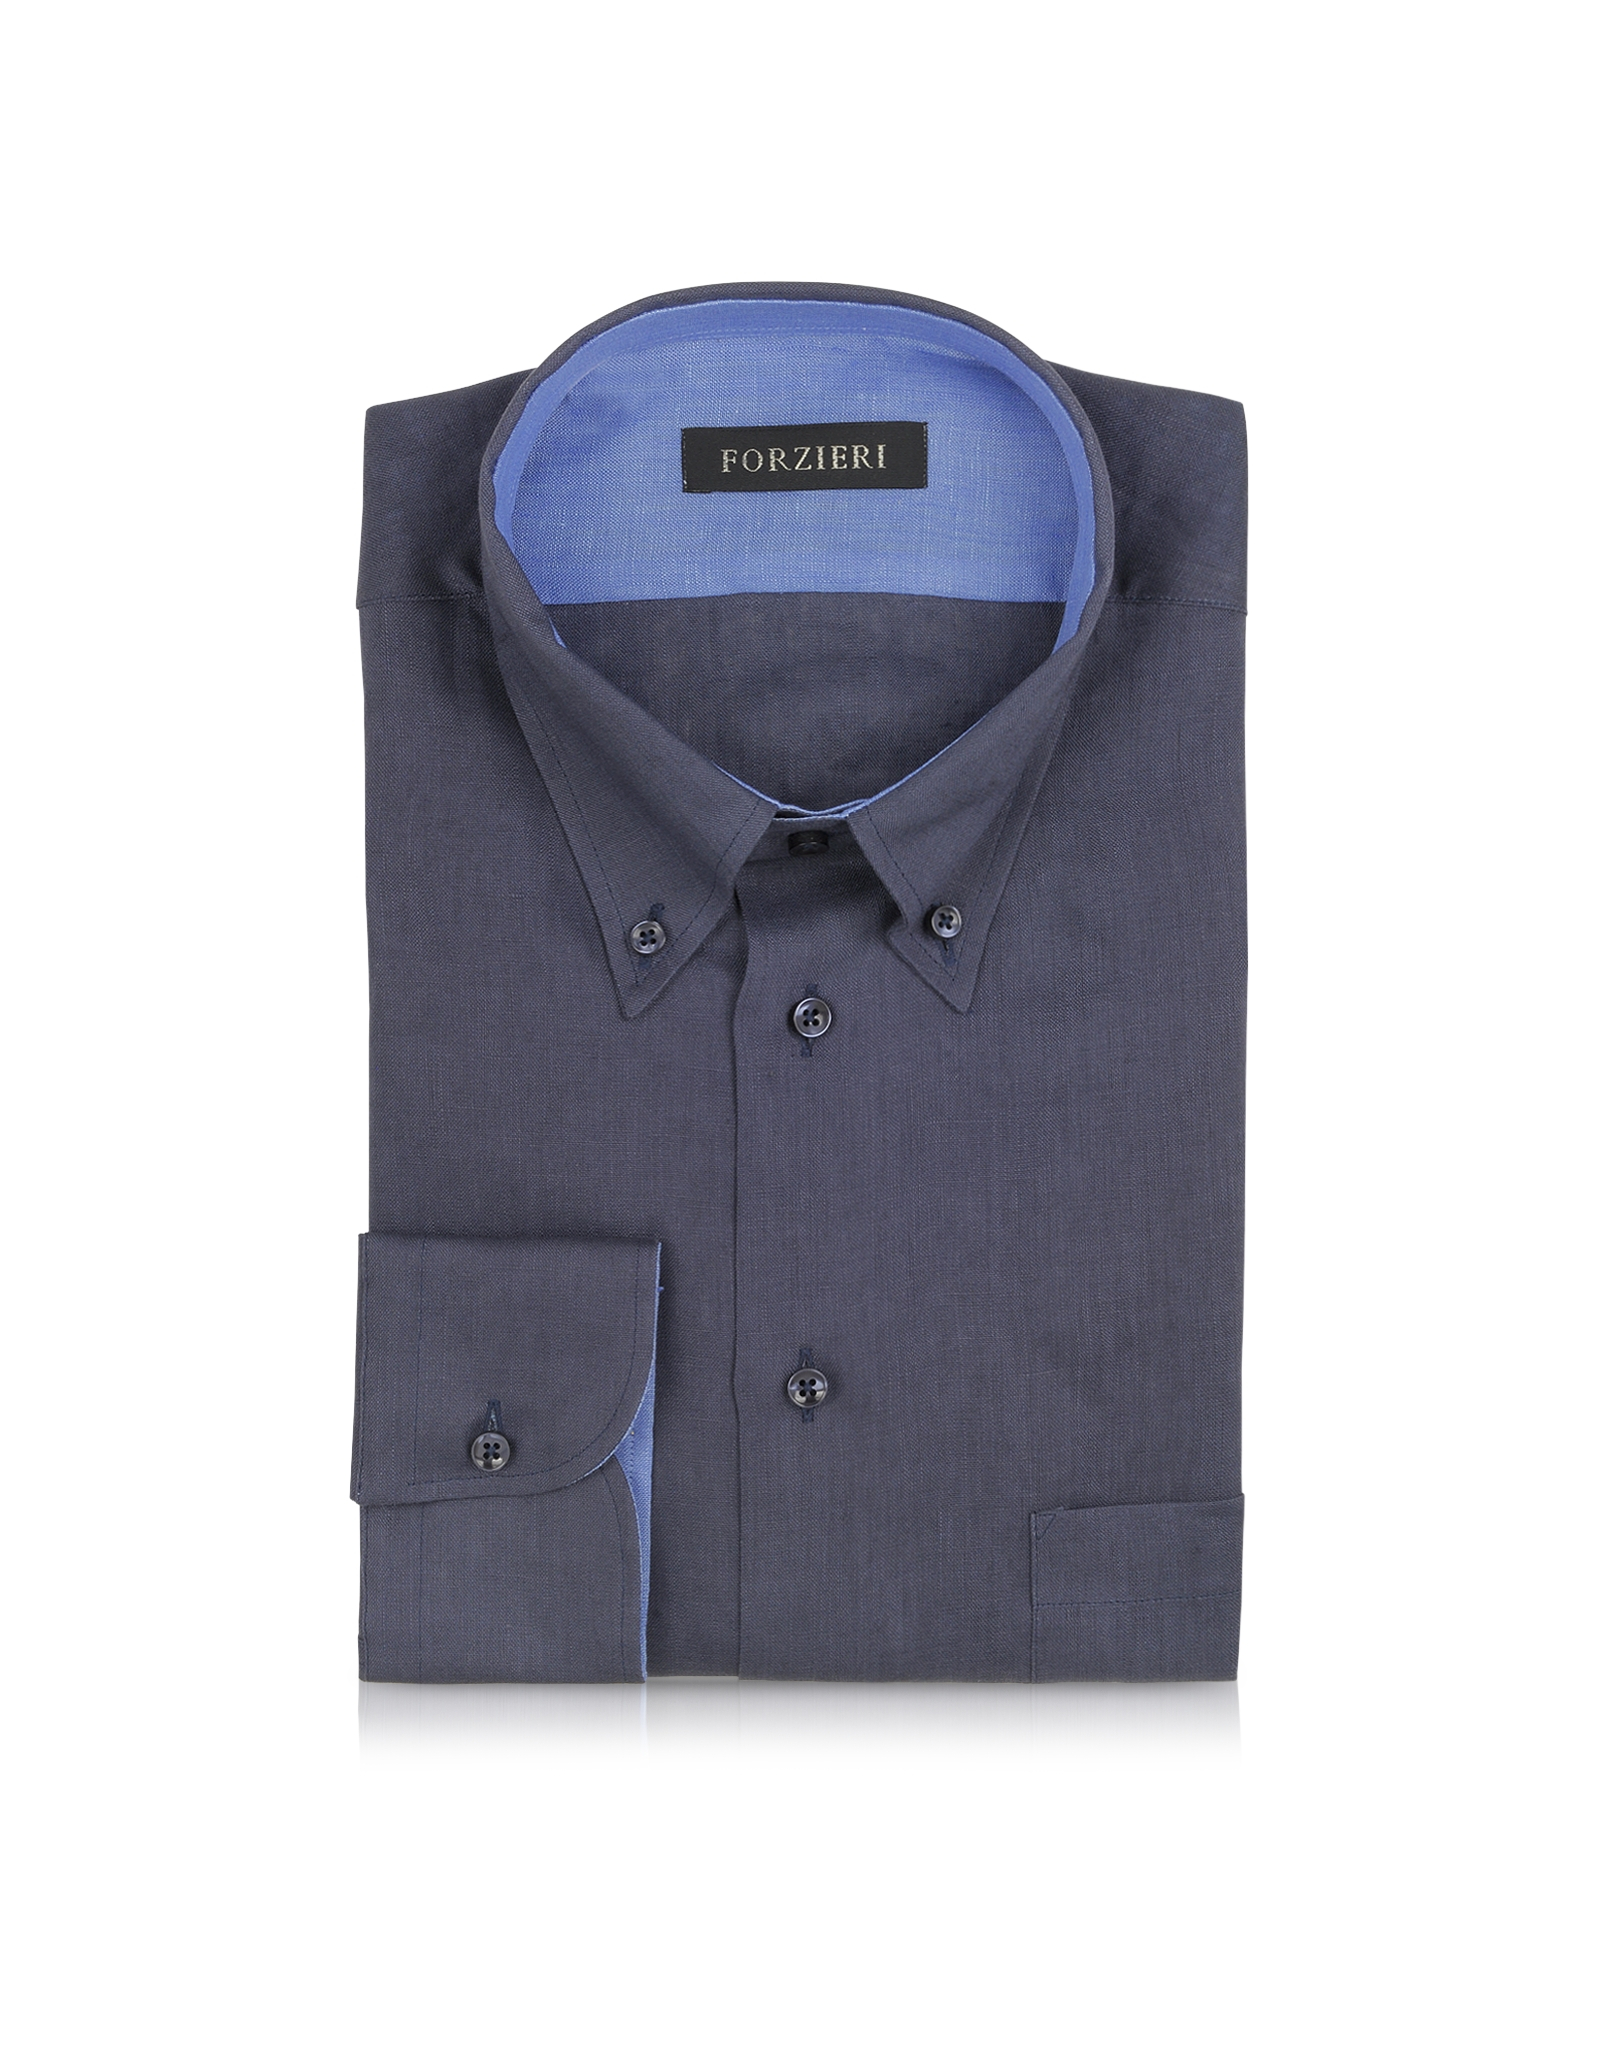 Lyst - Forzieri Dark Blue Button Down Linen Men's Shirt in Blue for Men